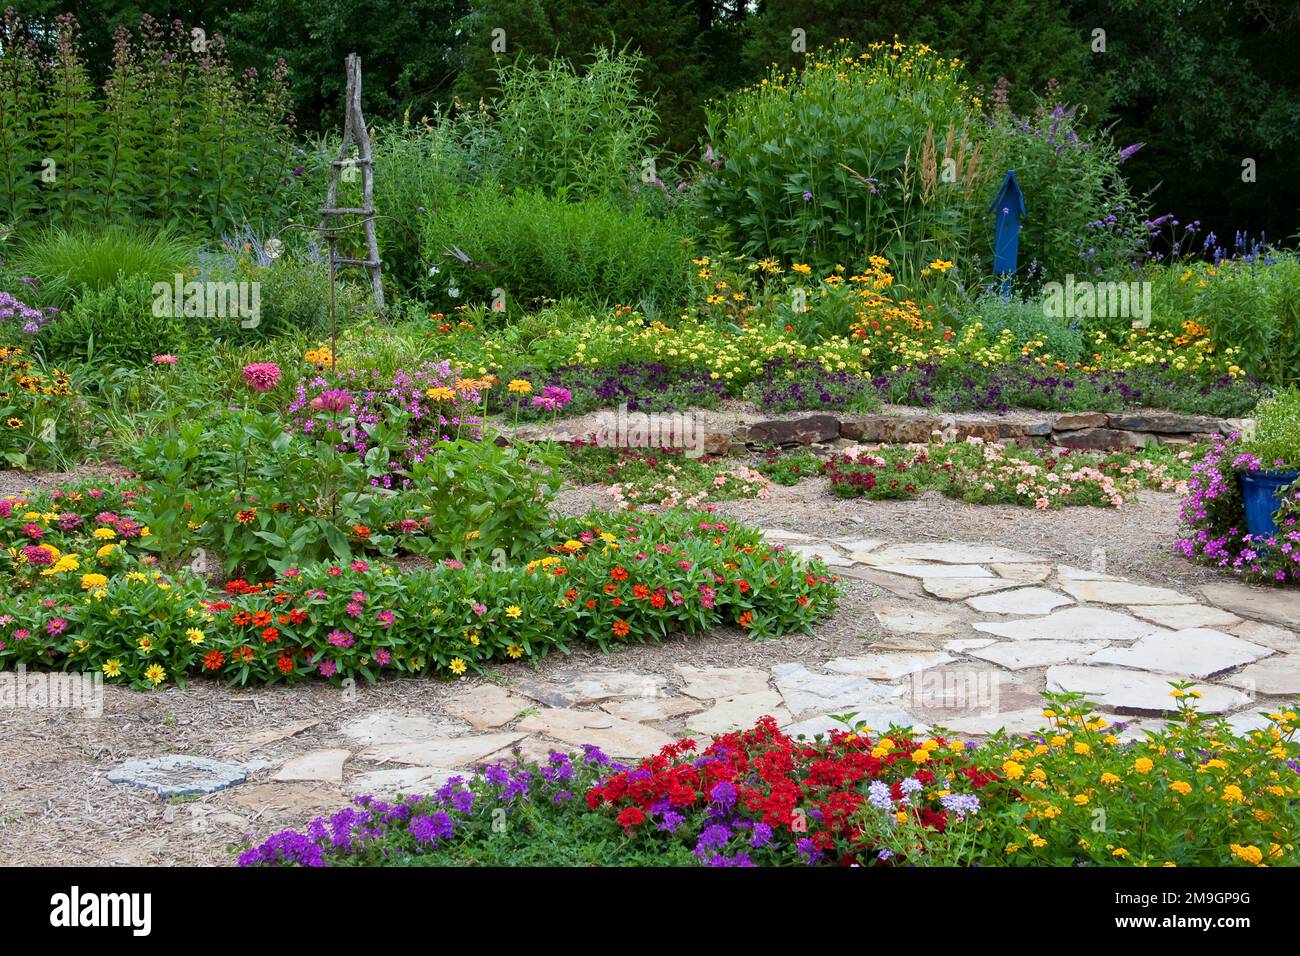 63821-21912 Flower garden with stone paths, blue pots, birdhouse, obelisk.  Black-eyed Susans (Rudbeckia hirta), zinnias, red & purple verbenas (Verbe Stock Photo